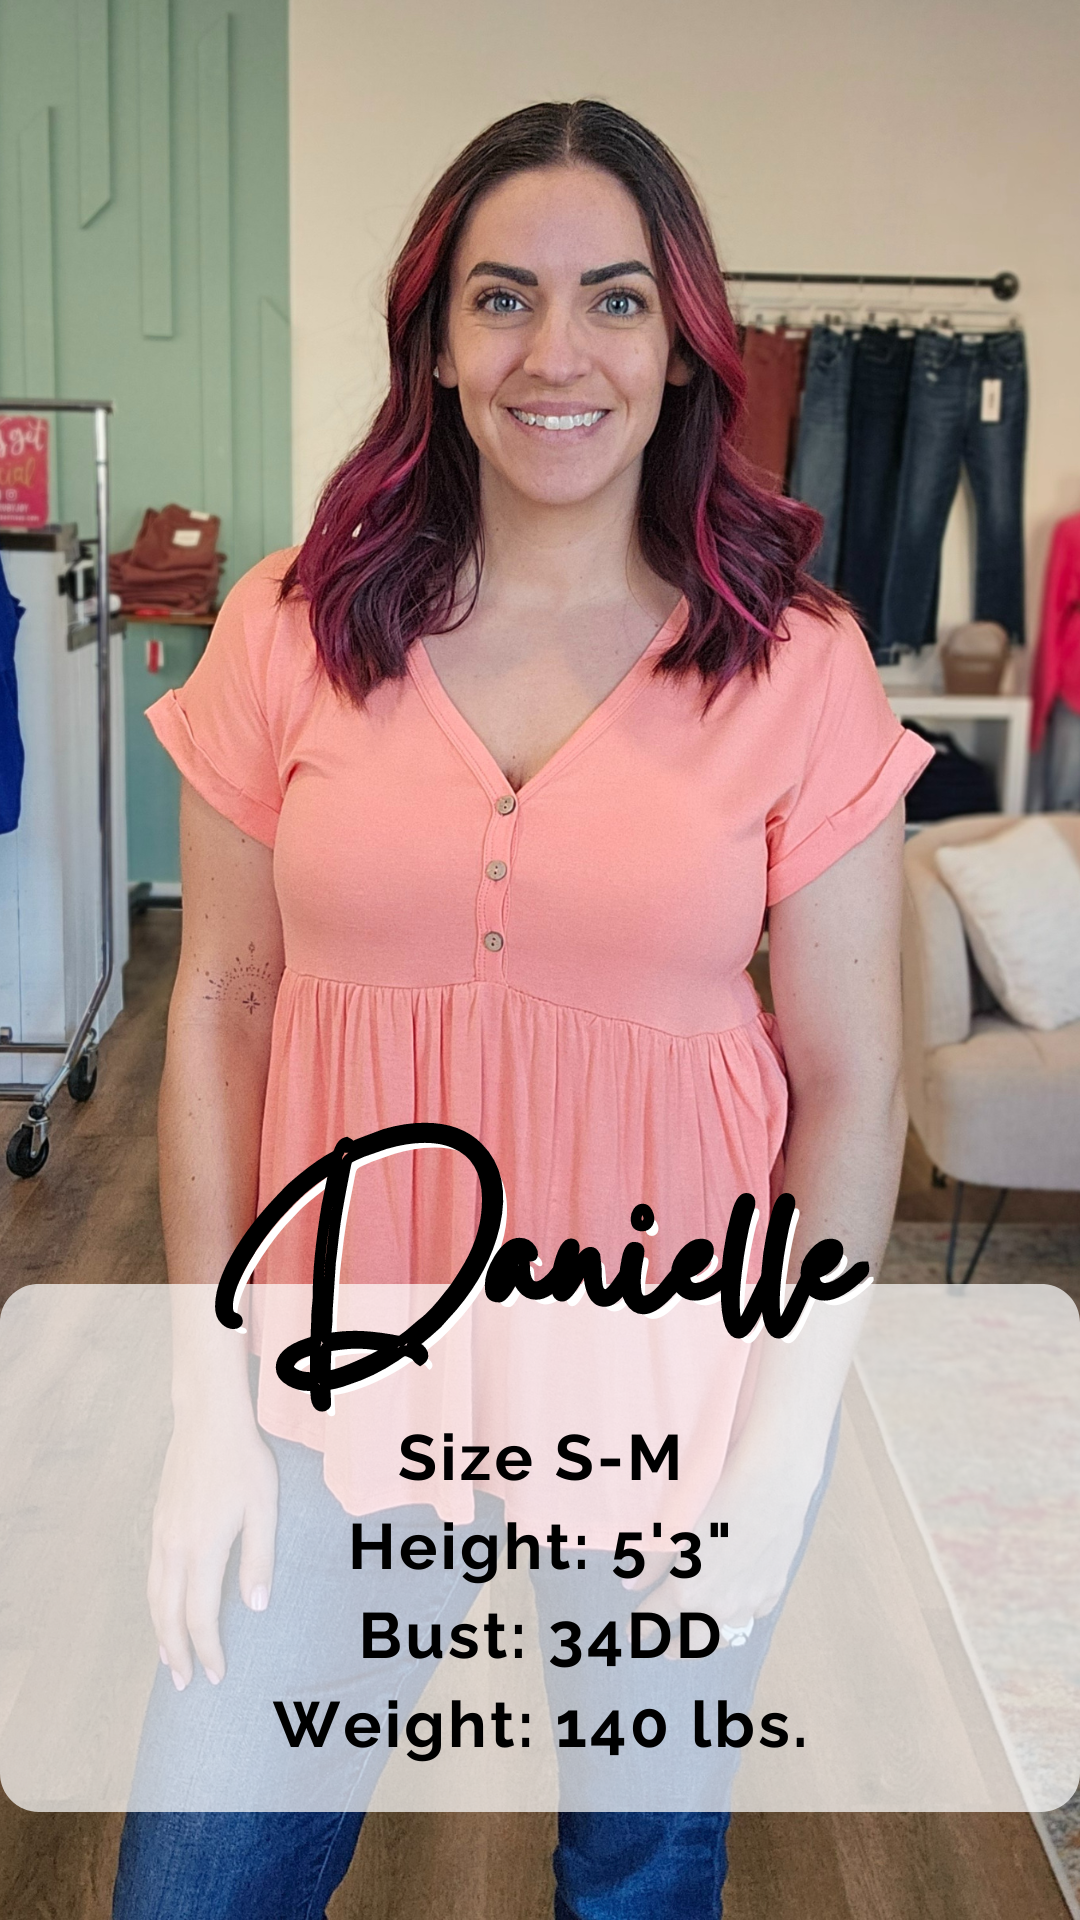 Meet The Models | Owner | Danielle